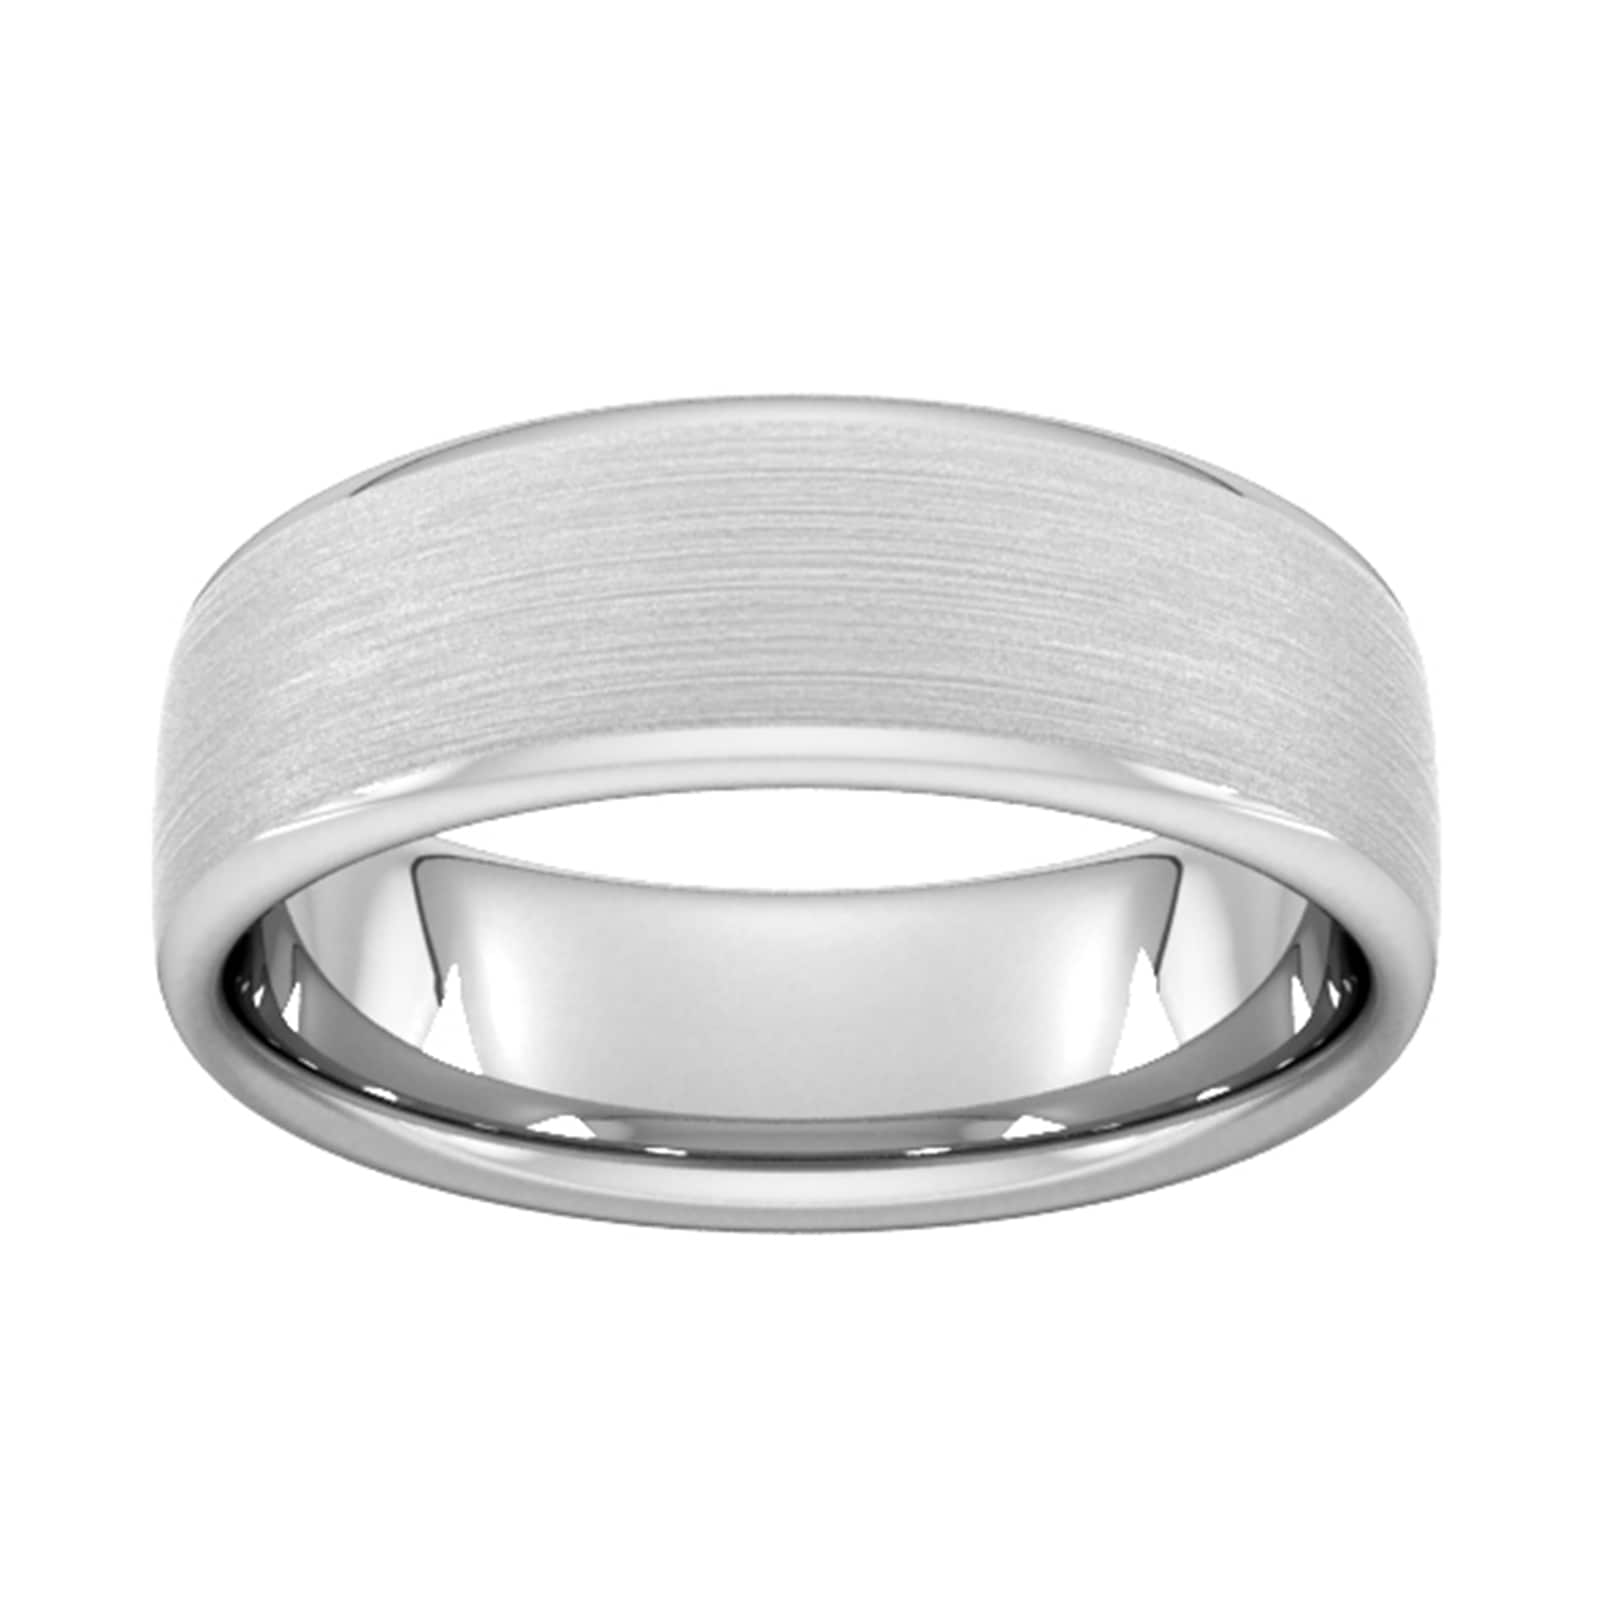 7mm Slight Court Standard Matt Finished Wedding Ring In 9 Carat White Gold - Ring Size K